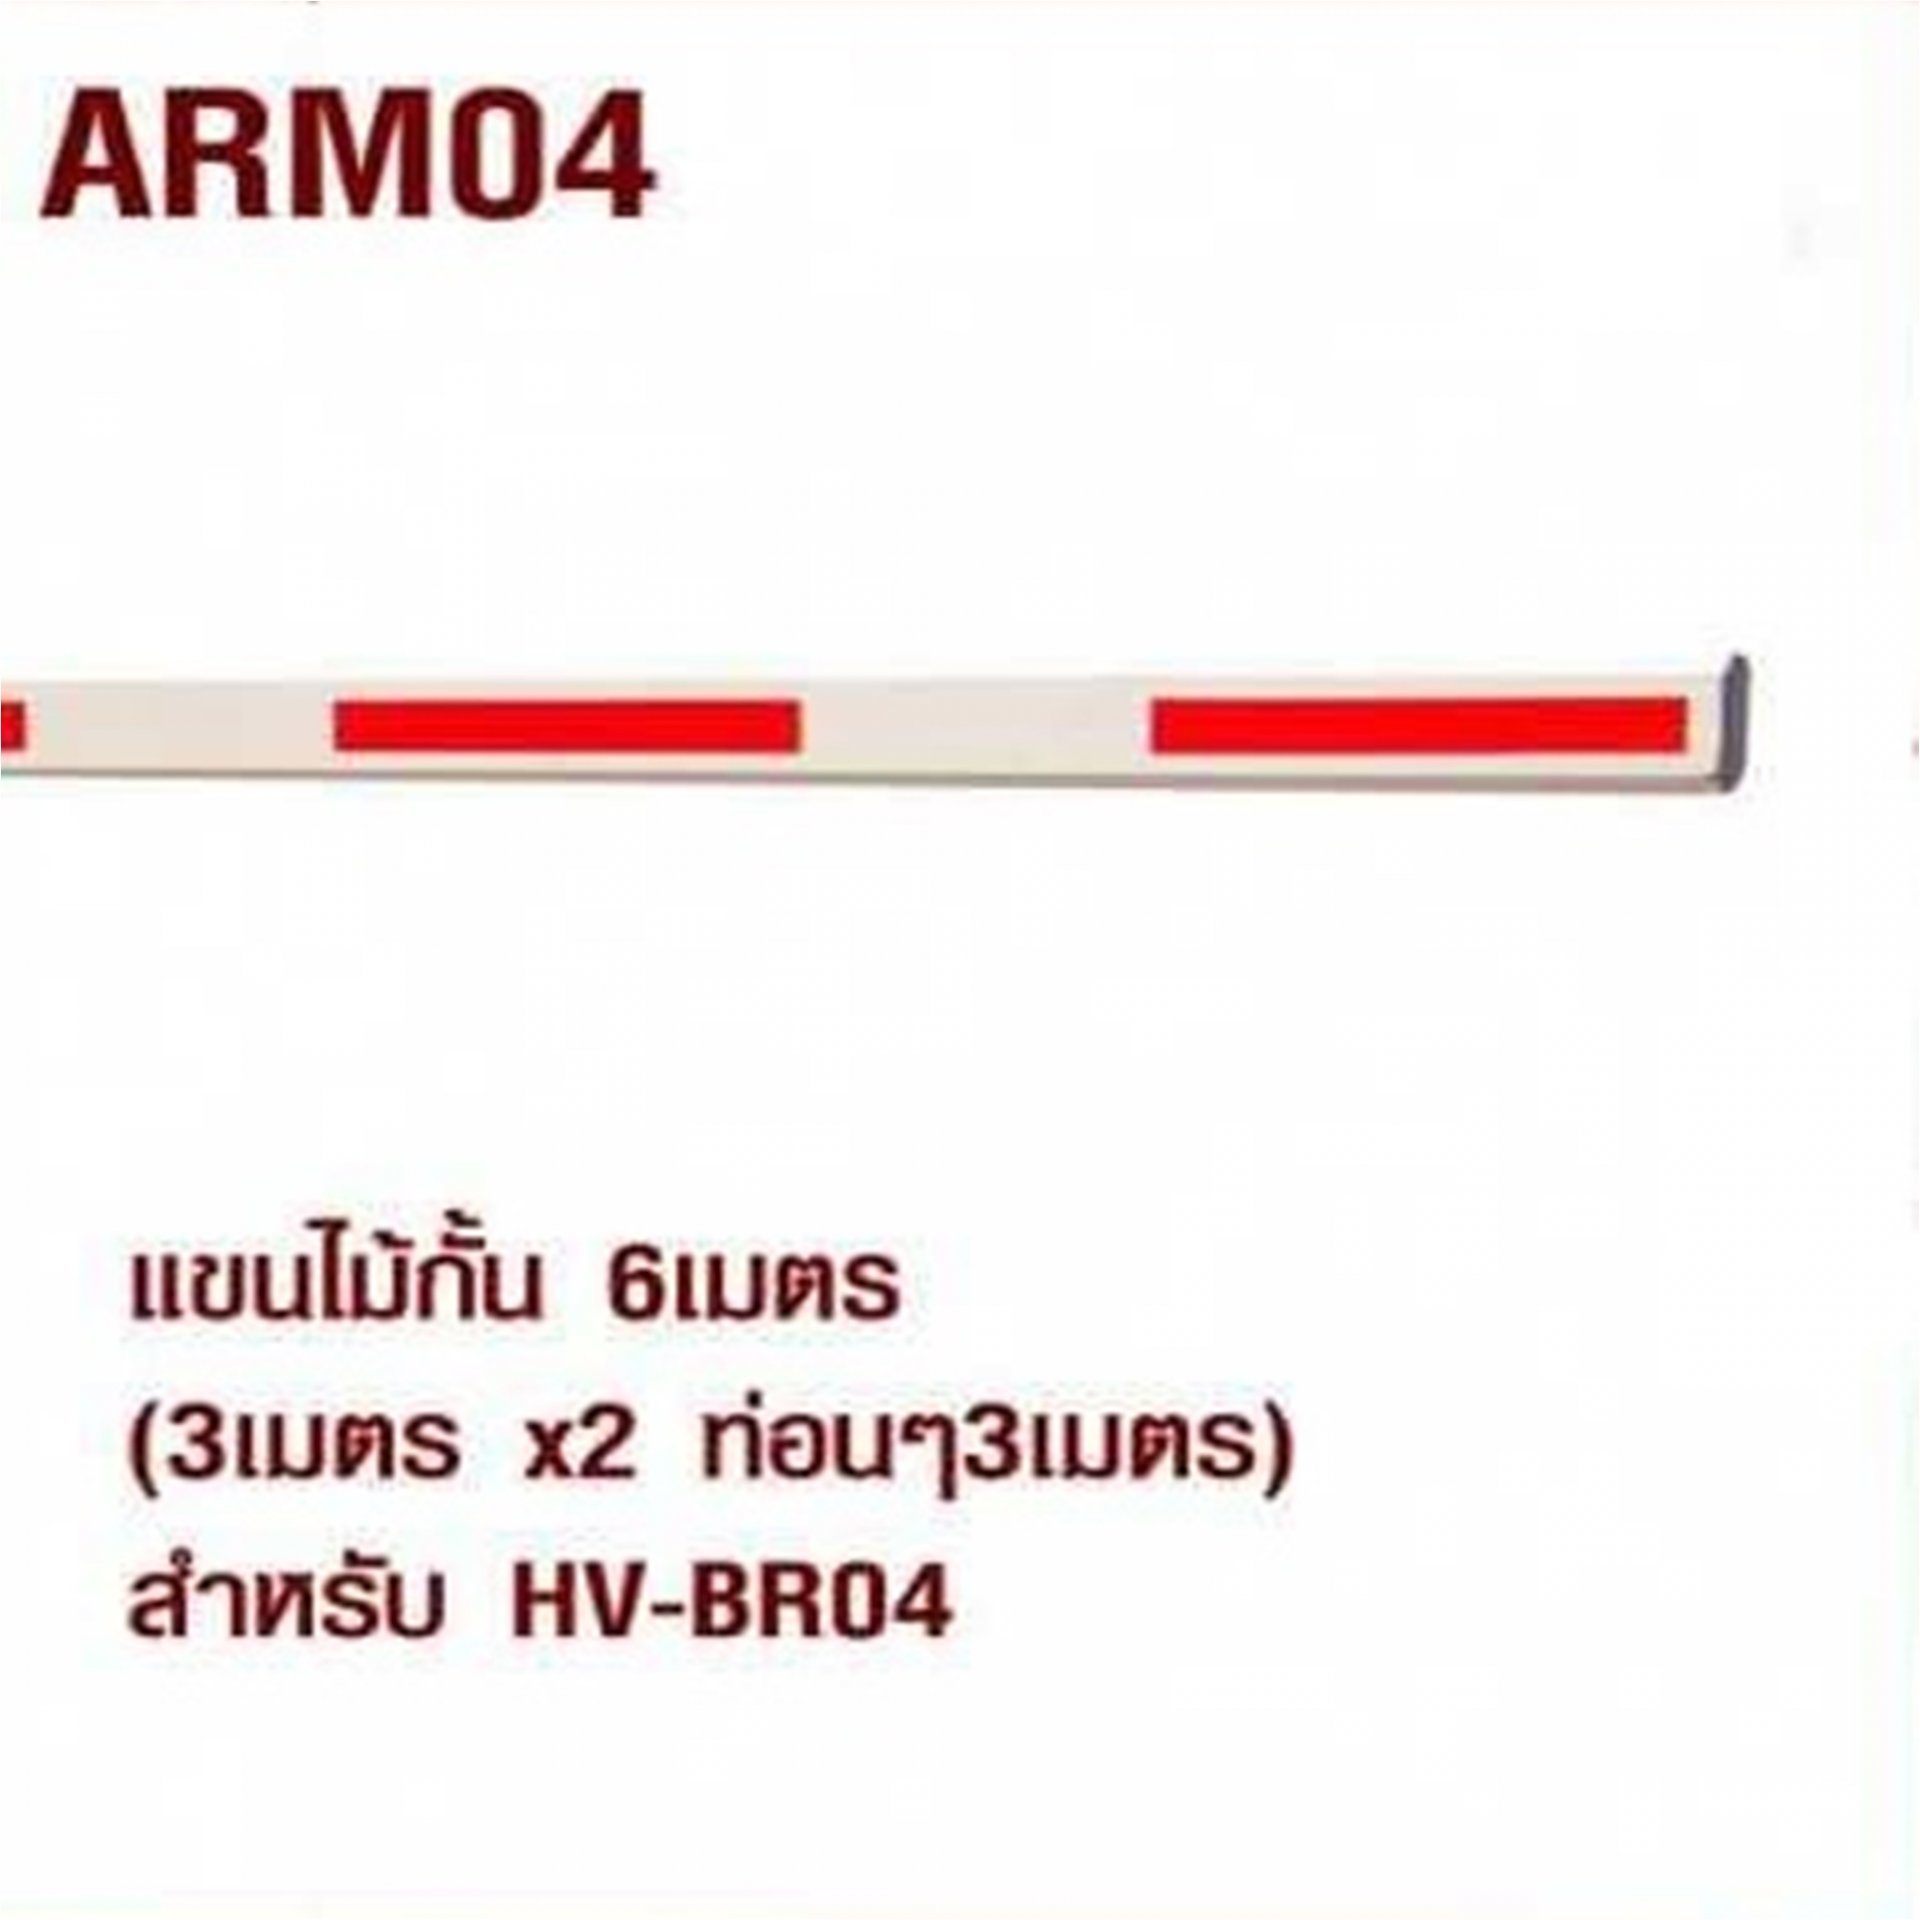 ARM04 แขนไม้กั้น 6 เมตร